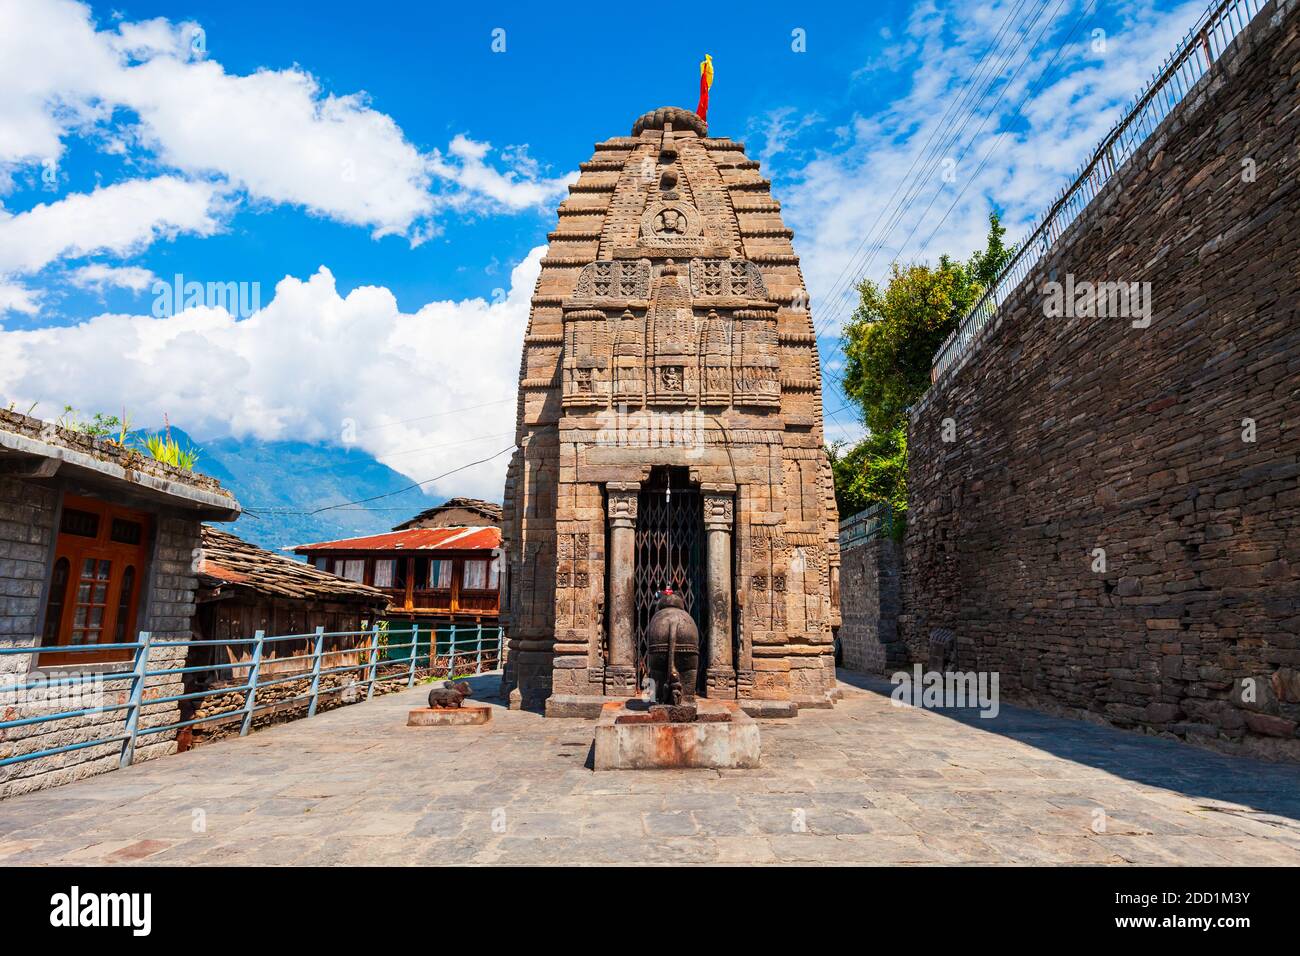 Temple Gauri Shankar dans le village de Naggar dans l'État de l'Himachal Pradesh Dans le nord de l'Inde Banque D'Images